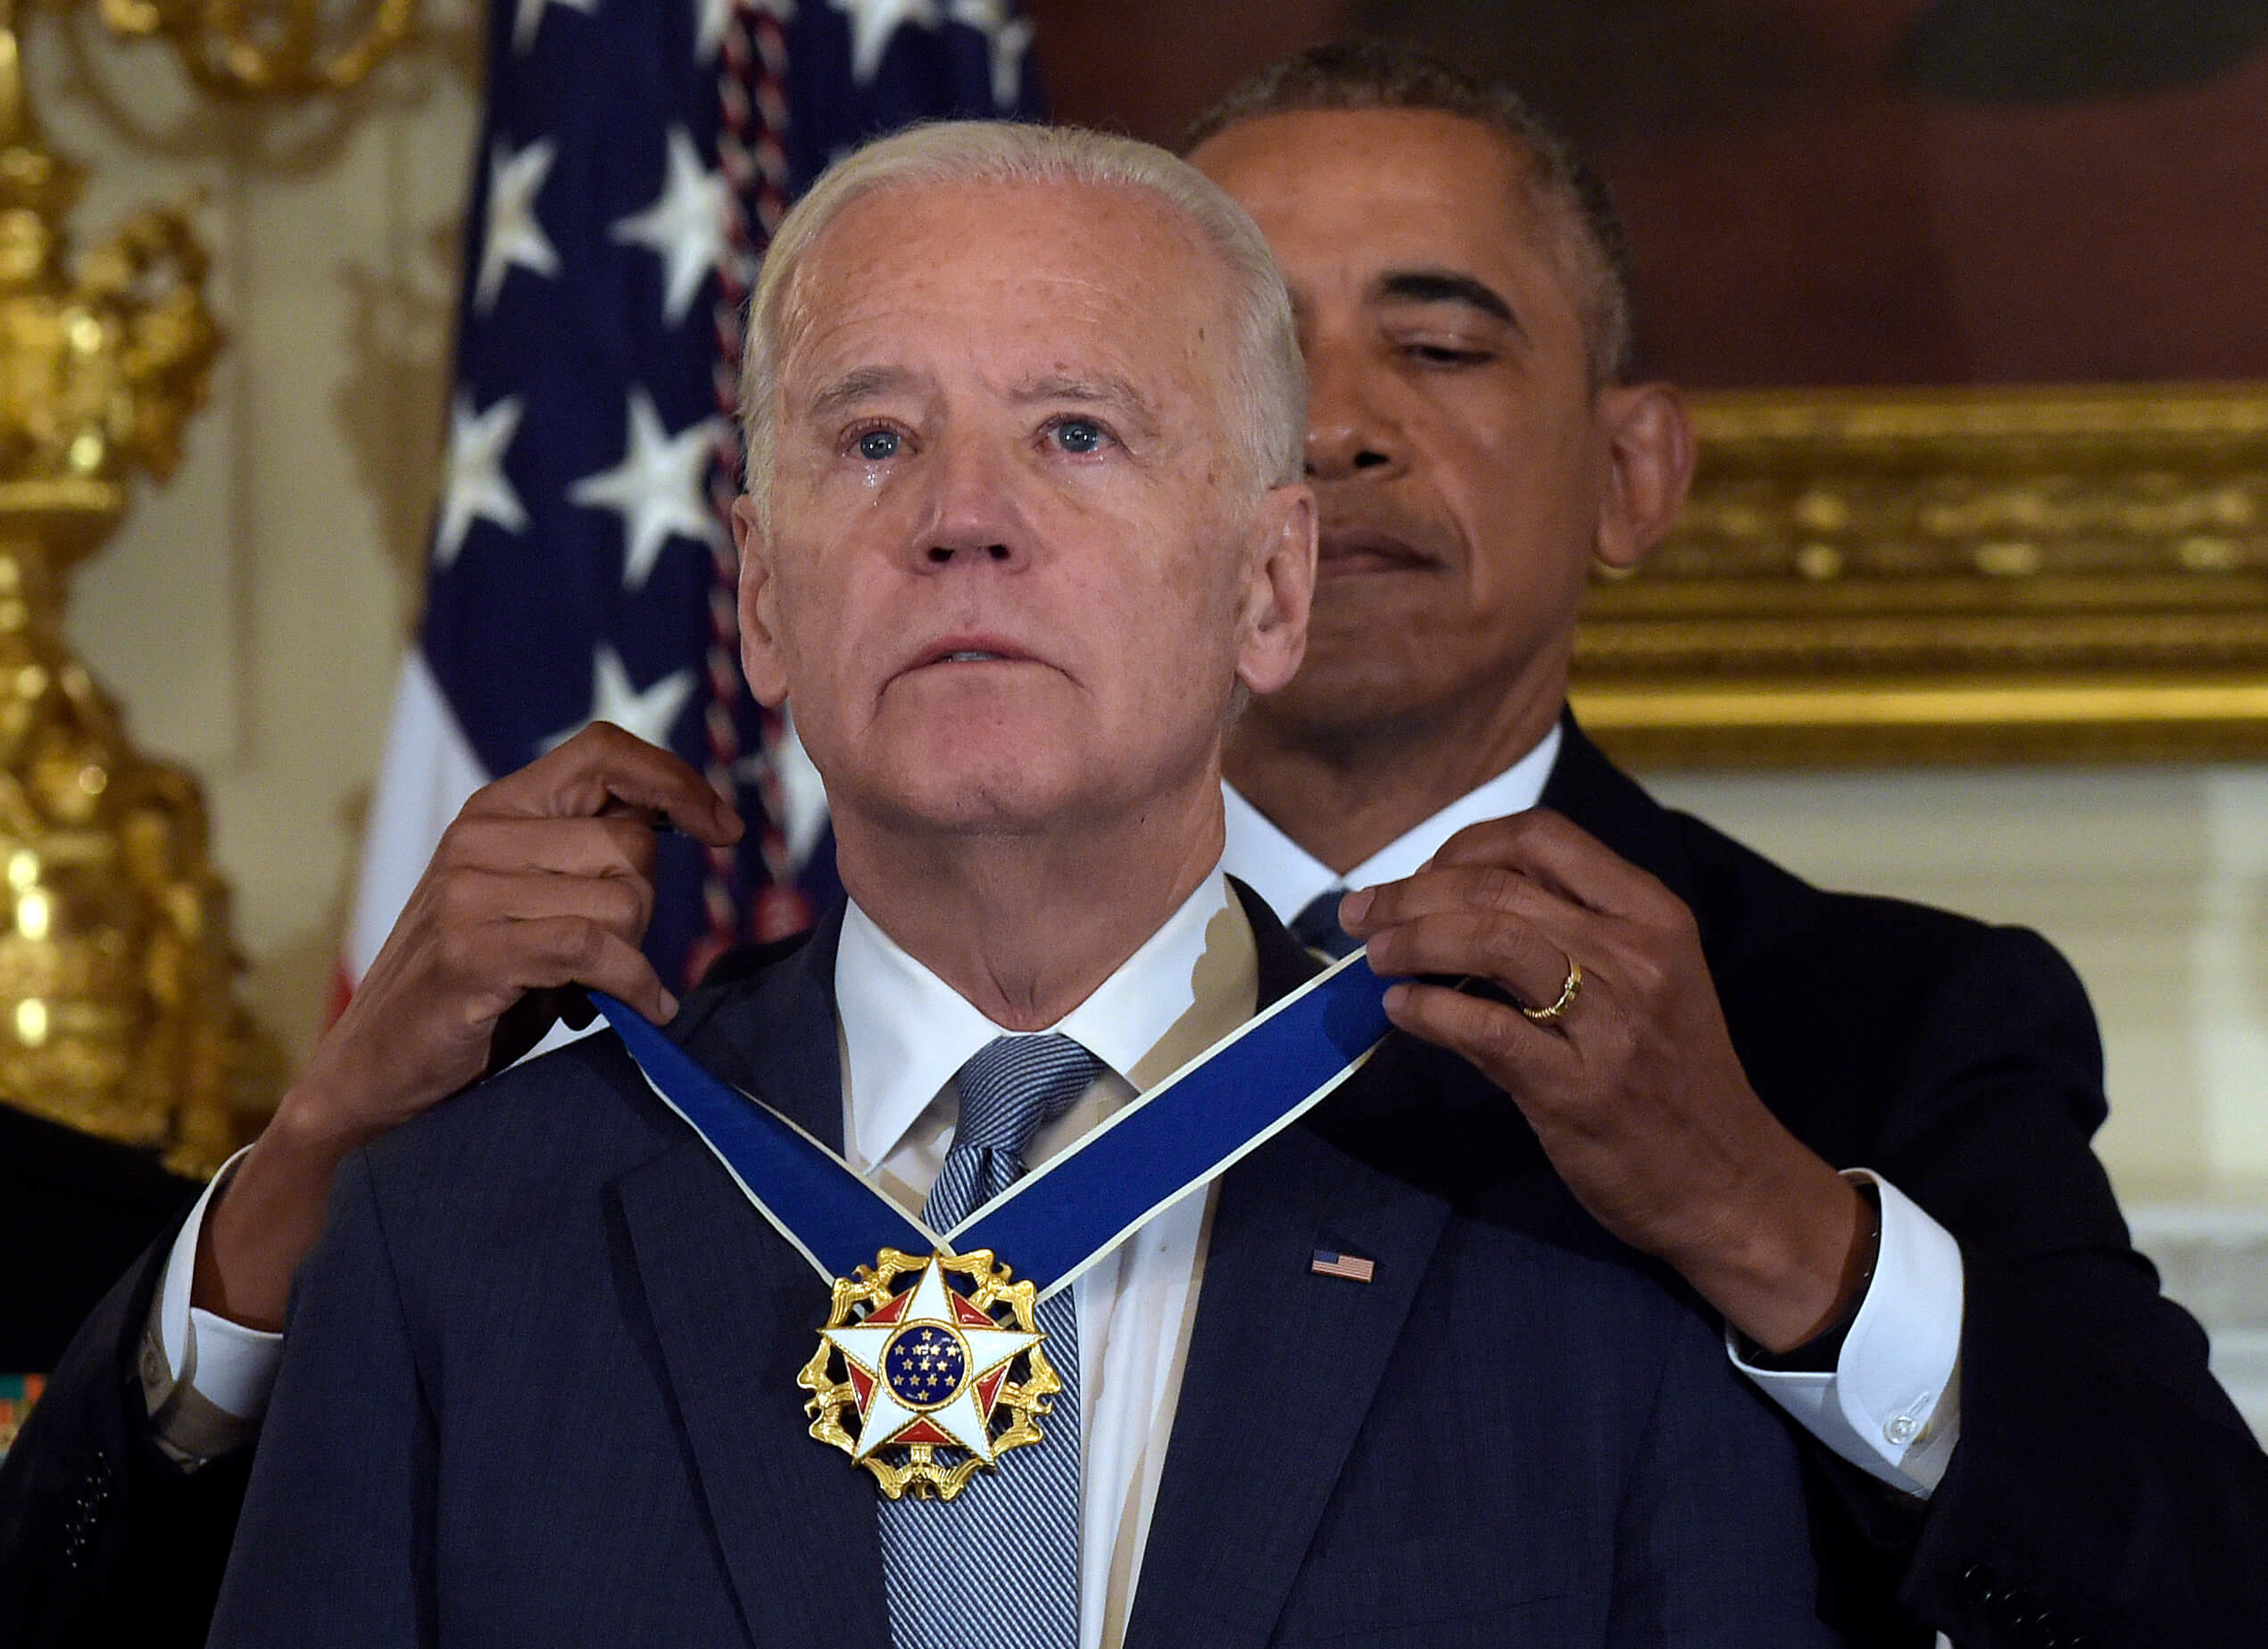 Barack Obama otorga a Joe Biden la Medalla Presidencial de la Libertad